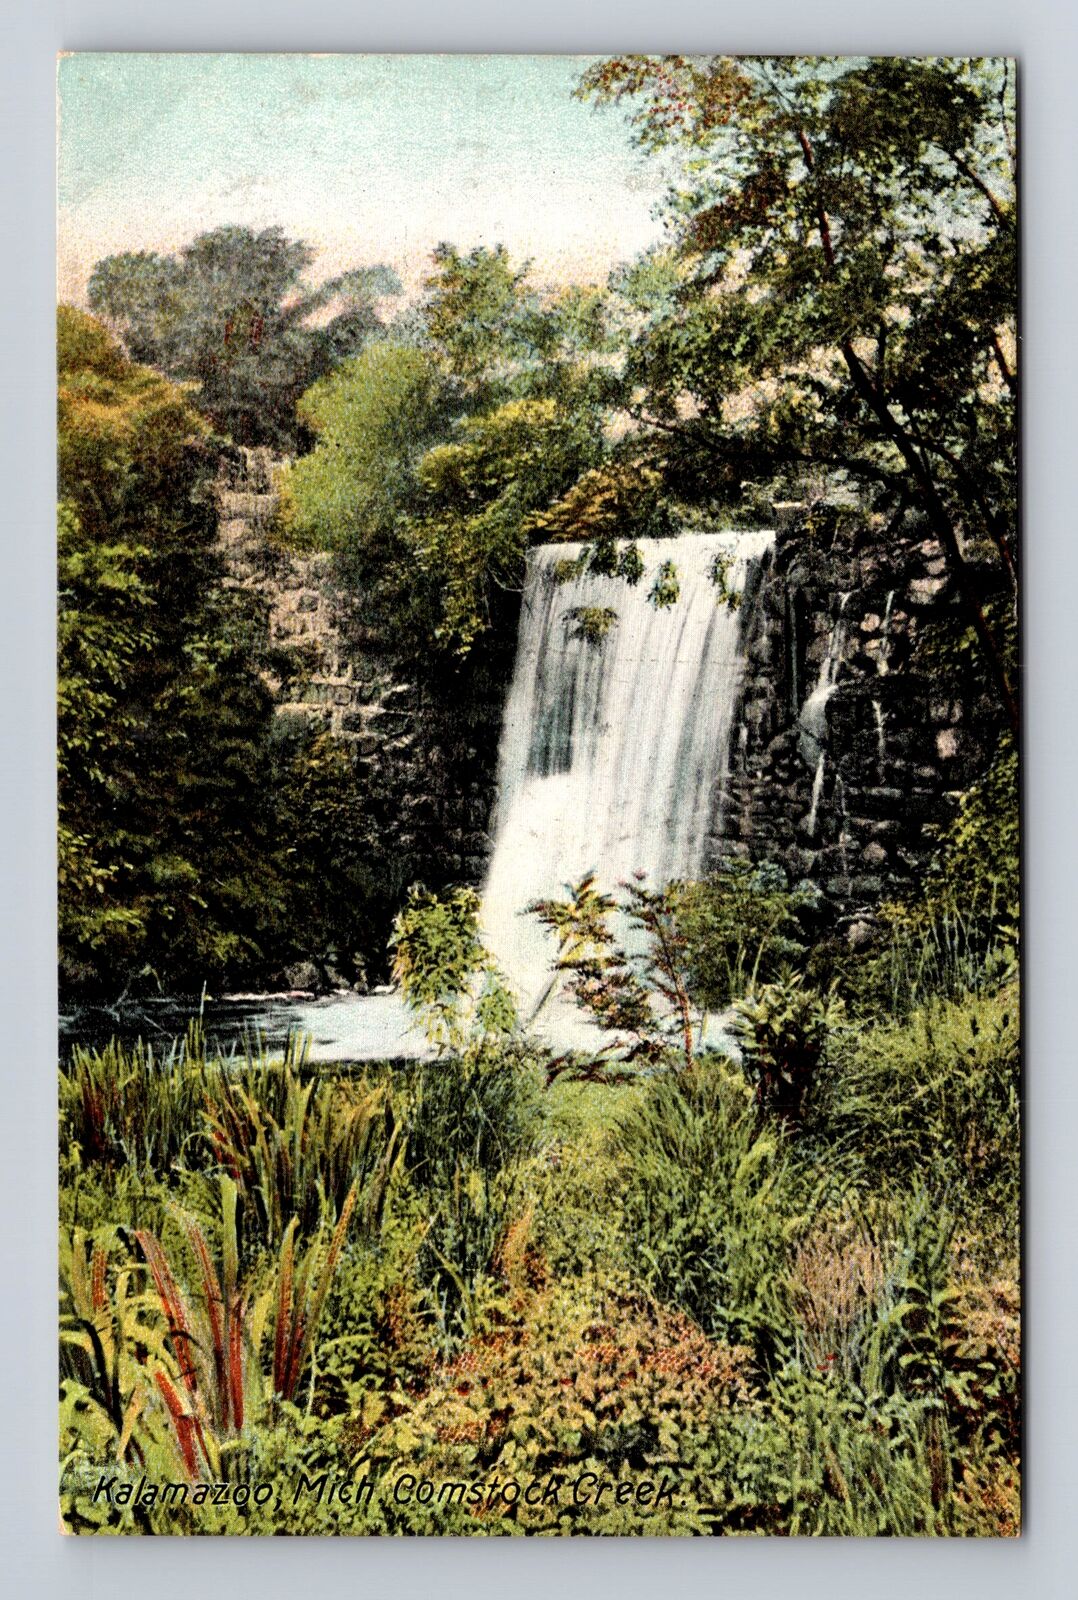 Kalamazoo MI-Michigan, Comstock Creek, Antique Vintage Souvenir Postcard